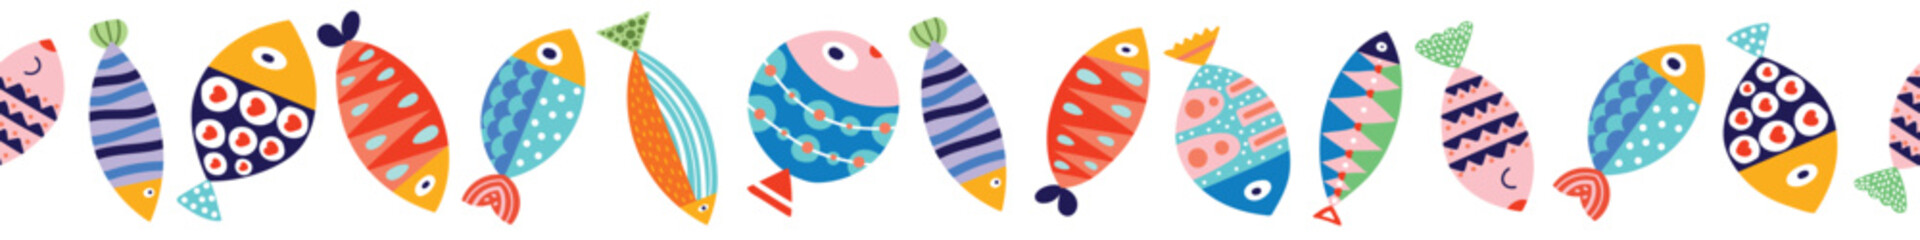 Vector seamless horizontal border with fish. Cute illustration. - 776066428